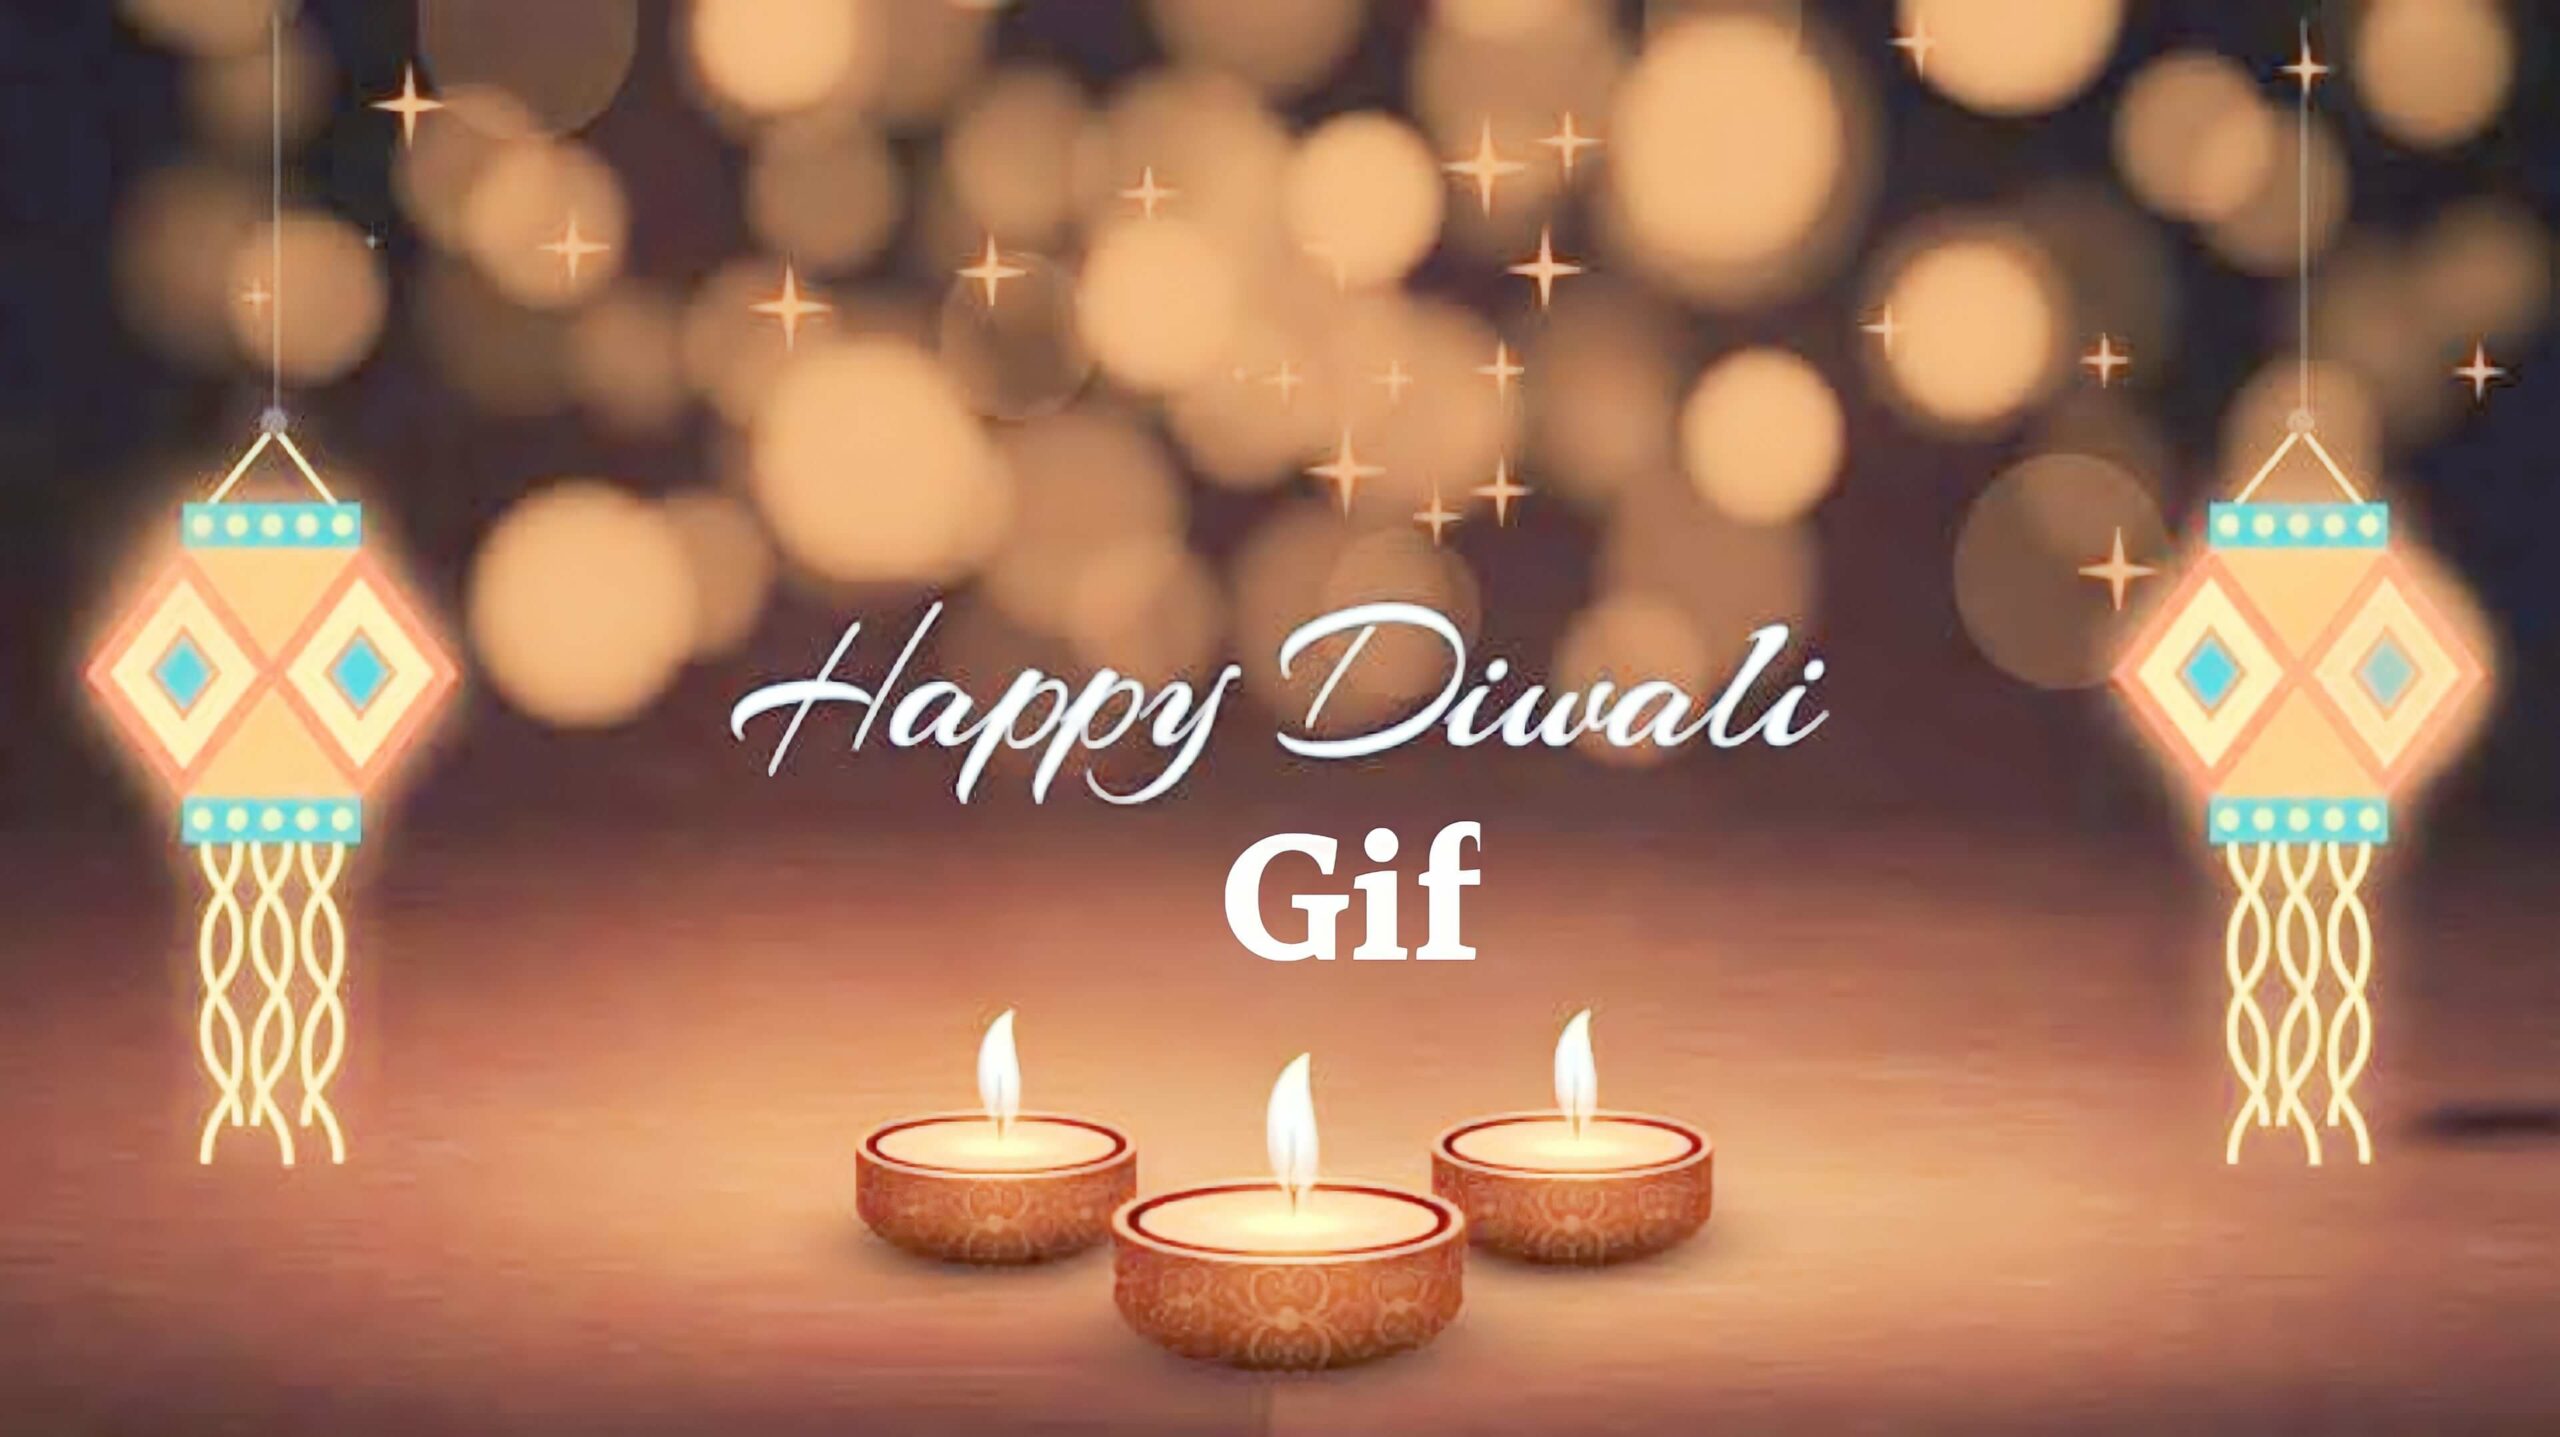 Happy Diwali GiFs